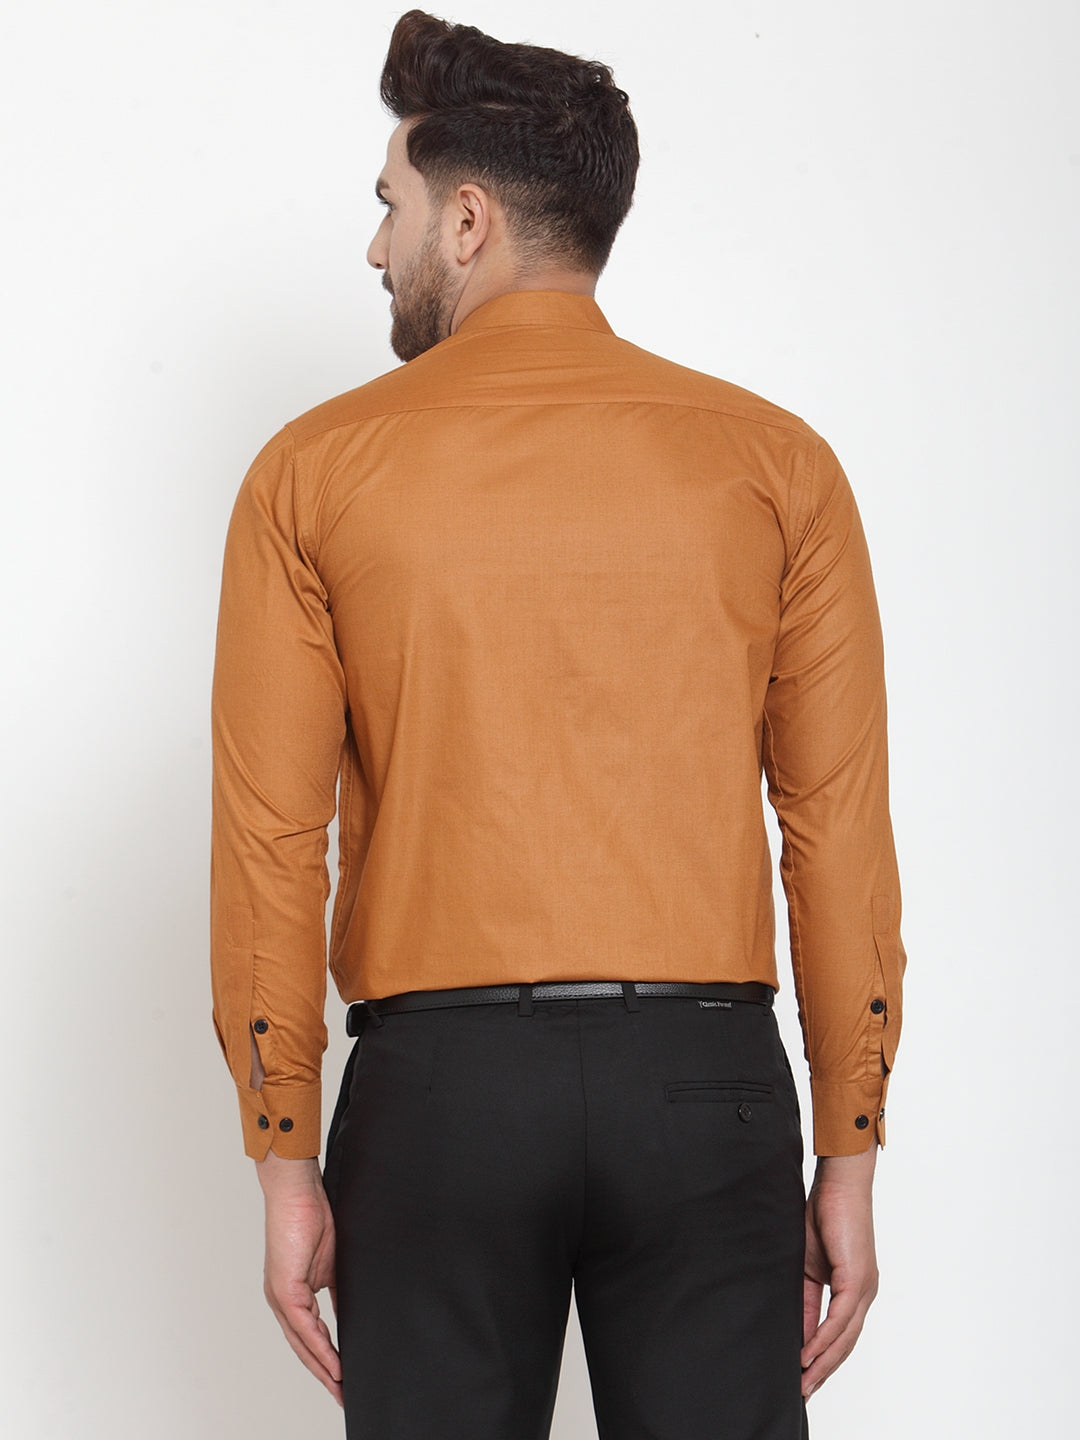 Men's Rust Cotton Solid Mandarin Collar Formal Shirts ( SF 726Rust ) - Jainish